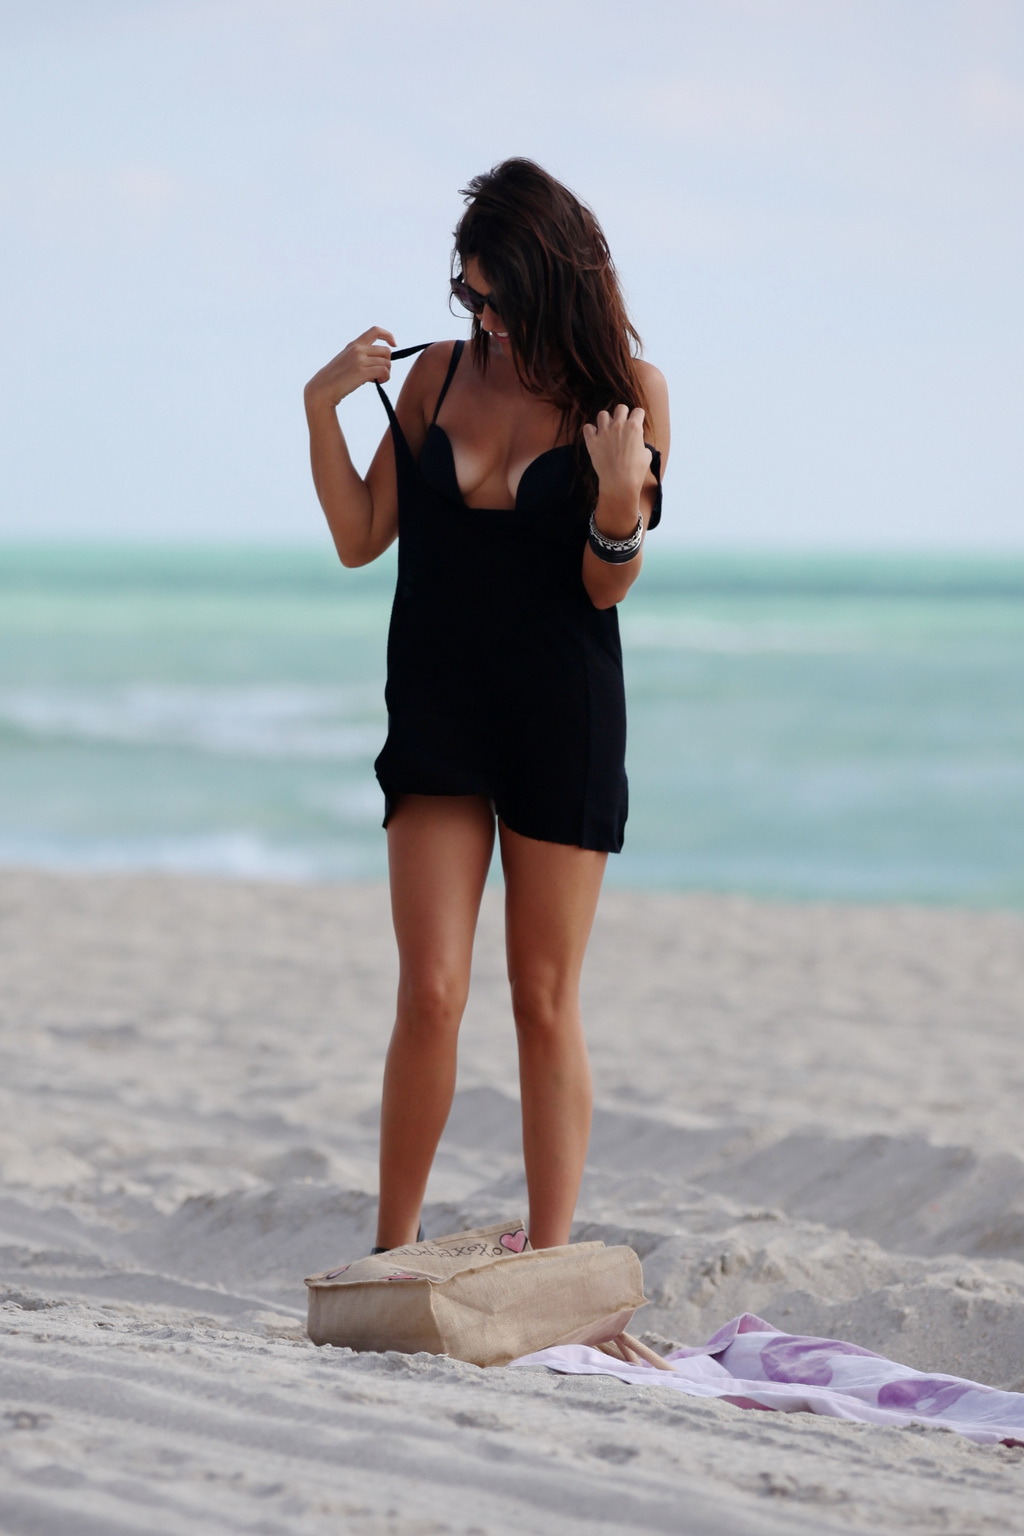 Claudia Romani On The Beach 14